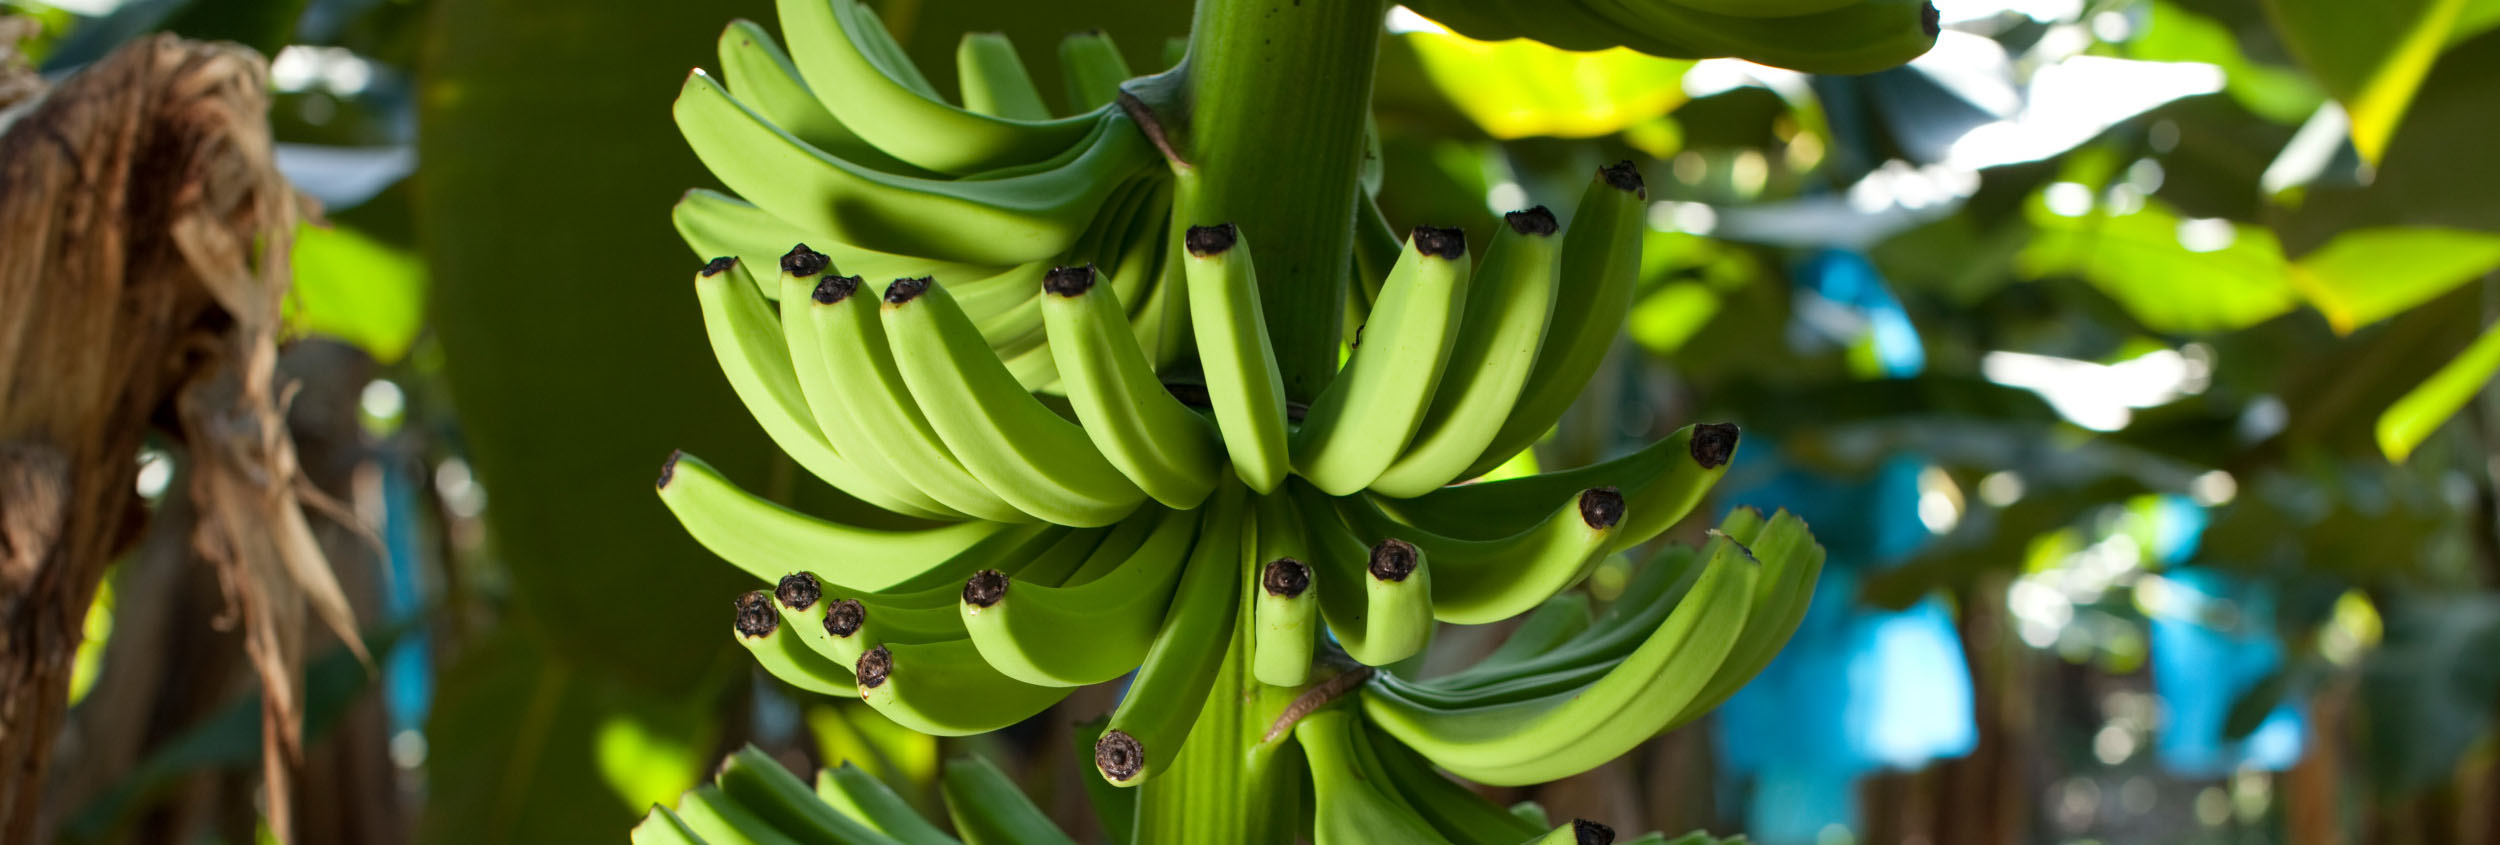 banana-green-sm